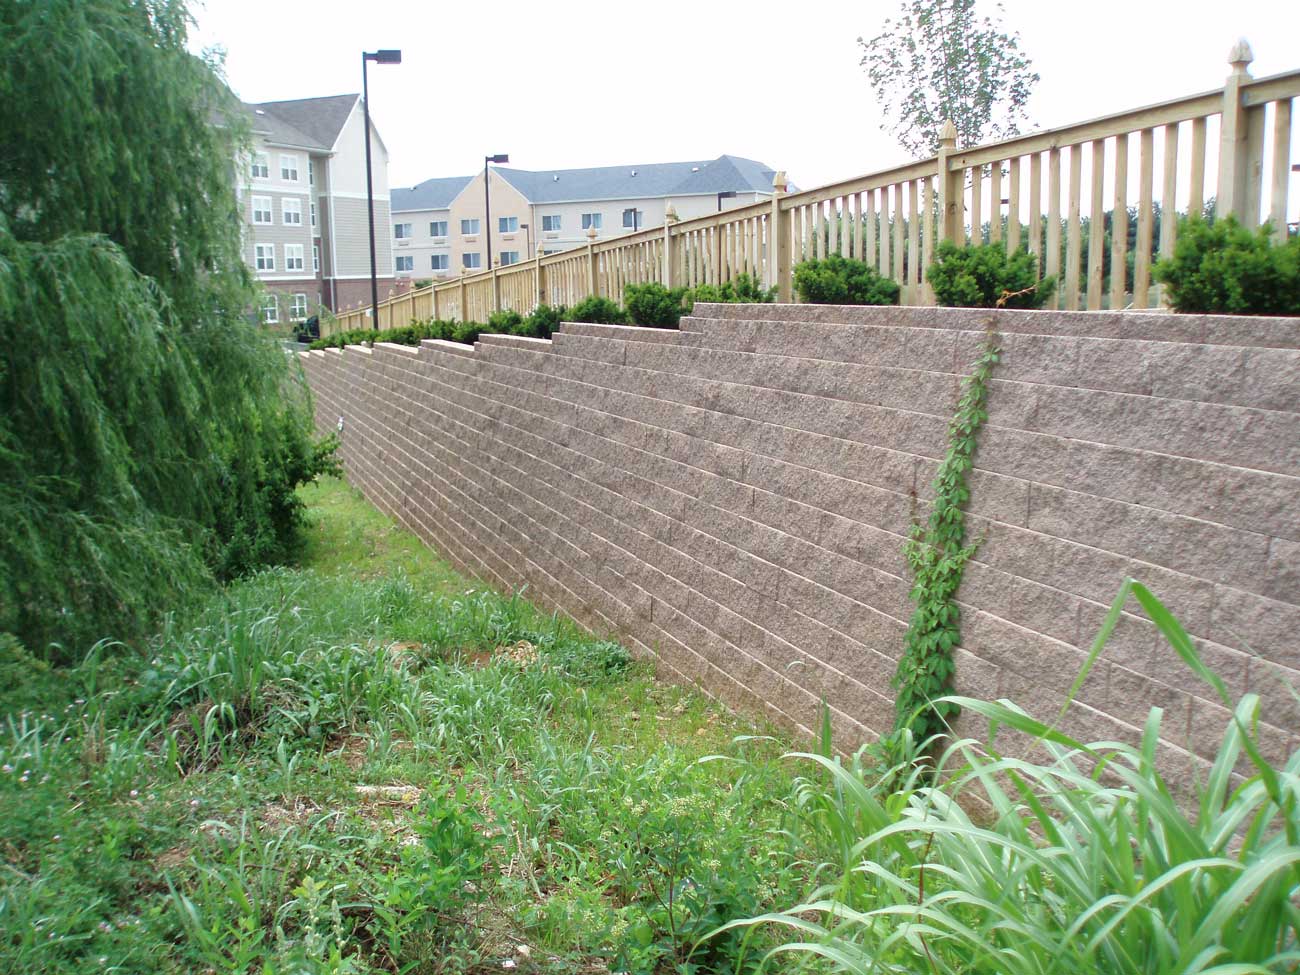 CornerStone block retaining wall Hilton Garden Inn green